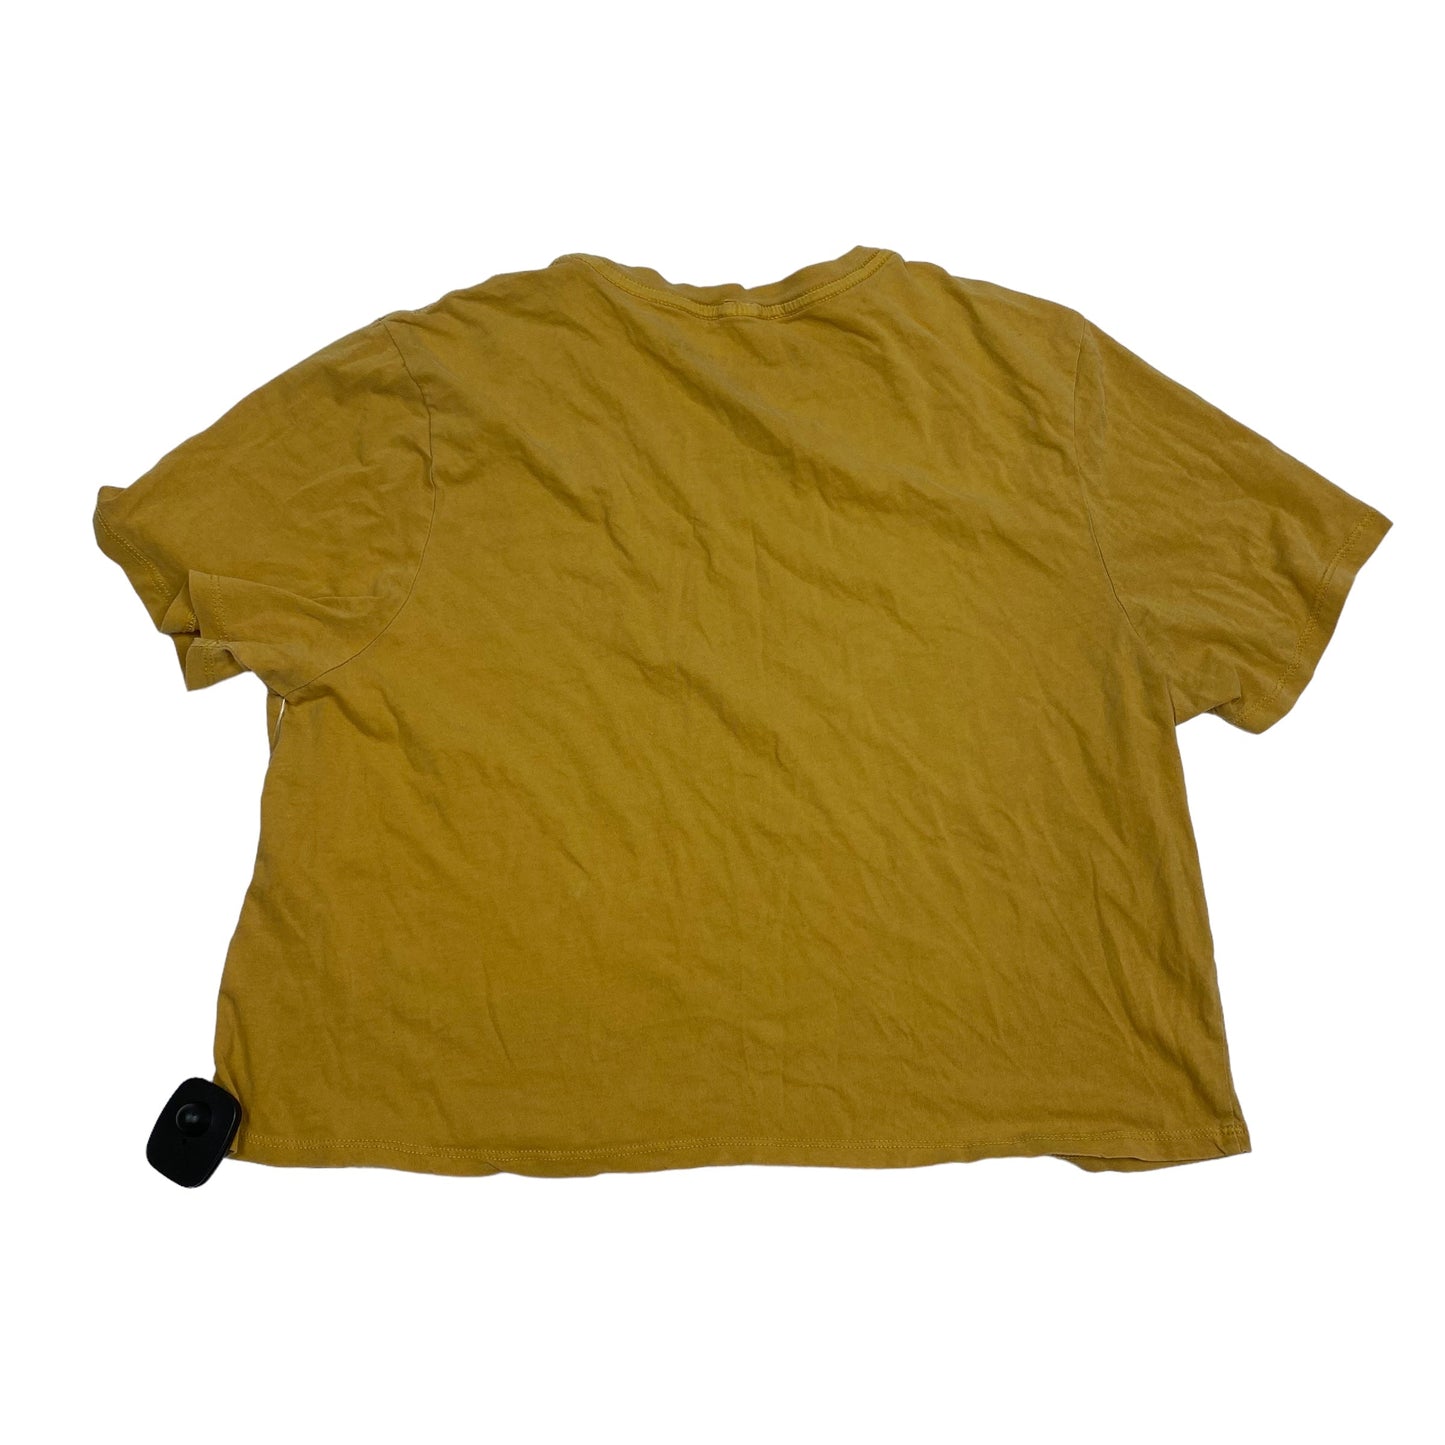 Yellow Top Short Sleeve Basic Yellowstone, Size L